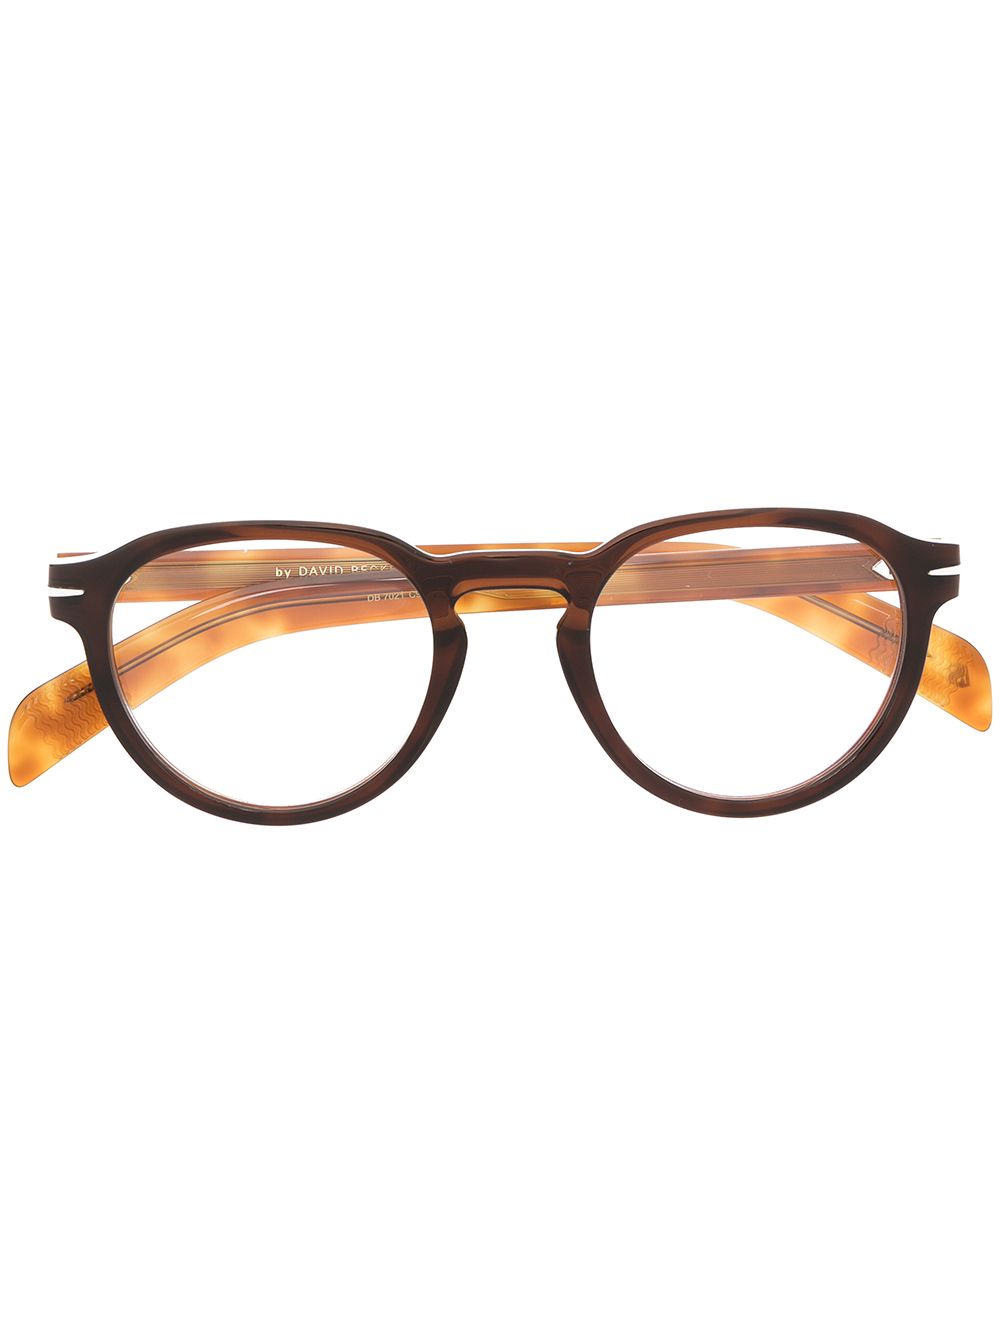 Eyewear By David Beckham Tortoiseshell Glasses In Brown